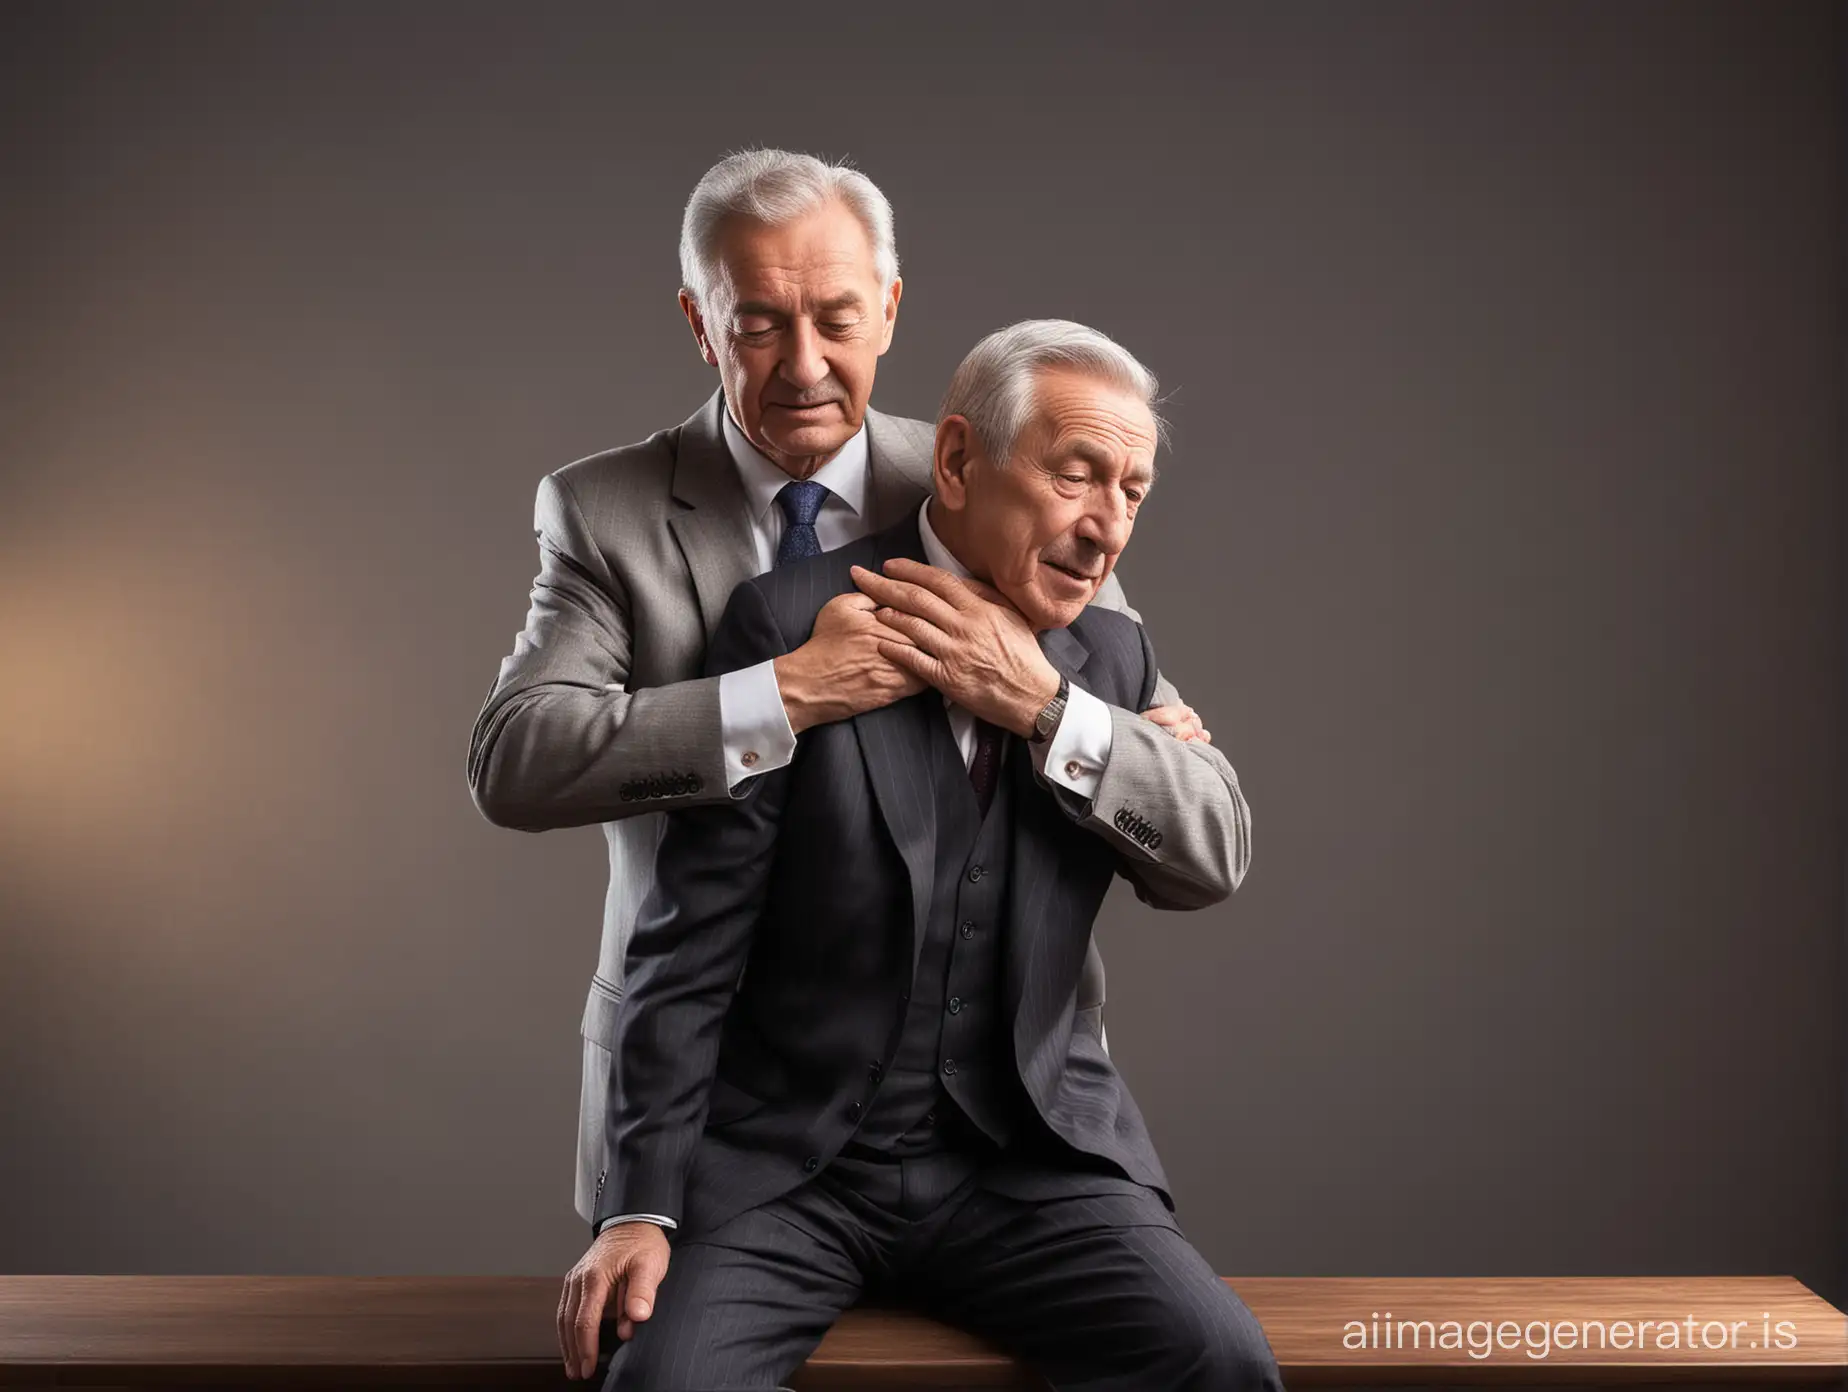 An elderly business putting hands on another elderly man's breast, both men kneeling, full body shot, full body shot, office background, dramatic lighting